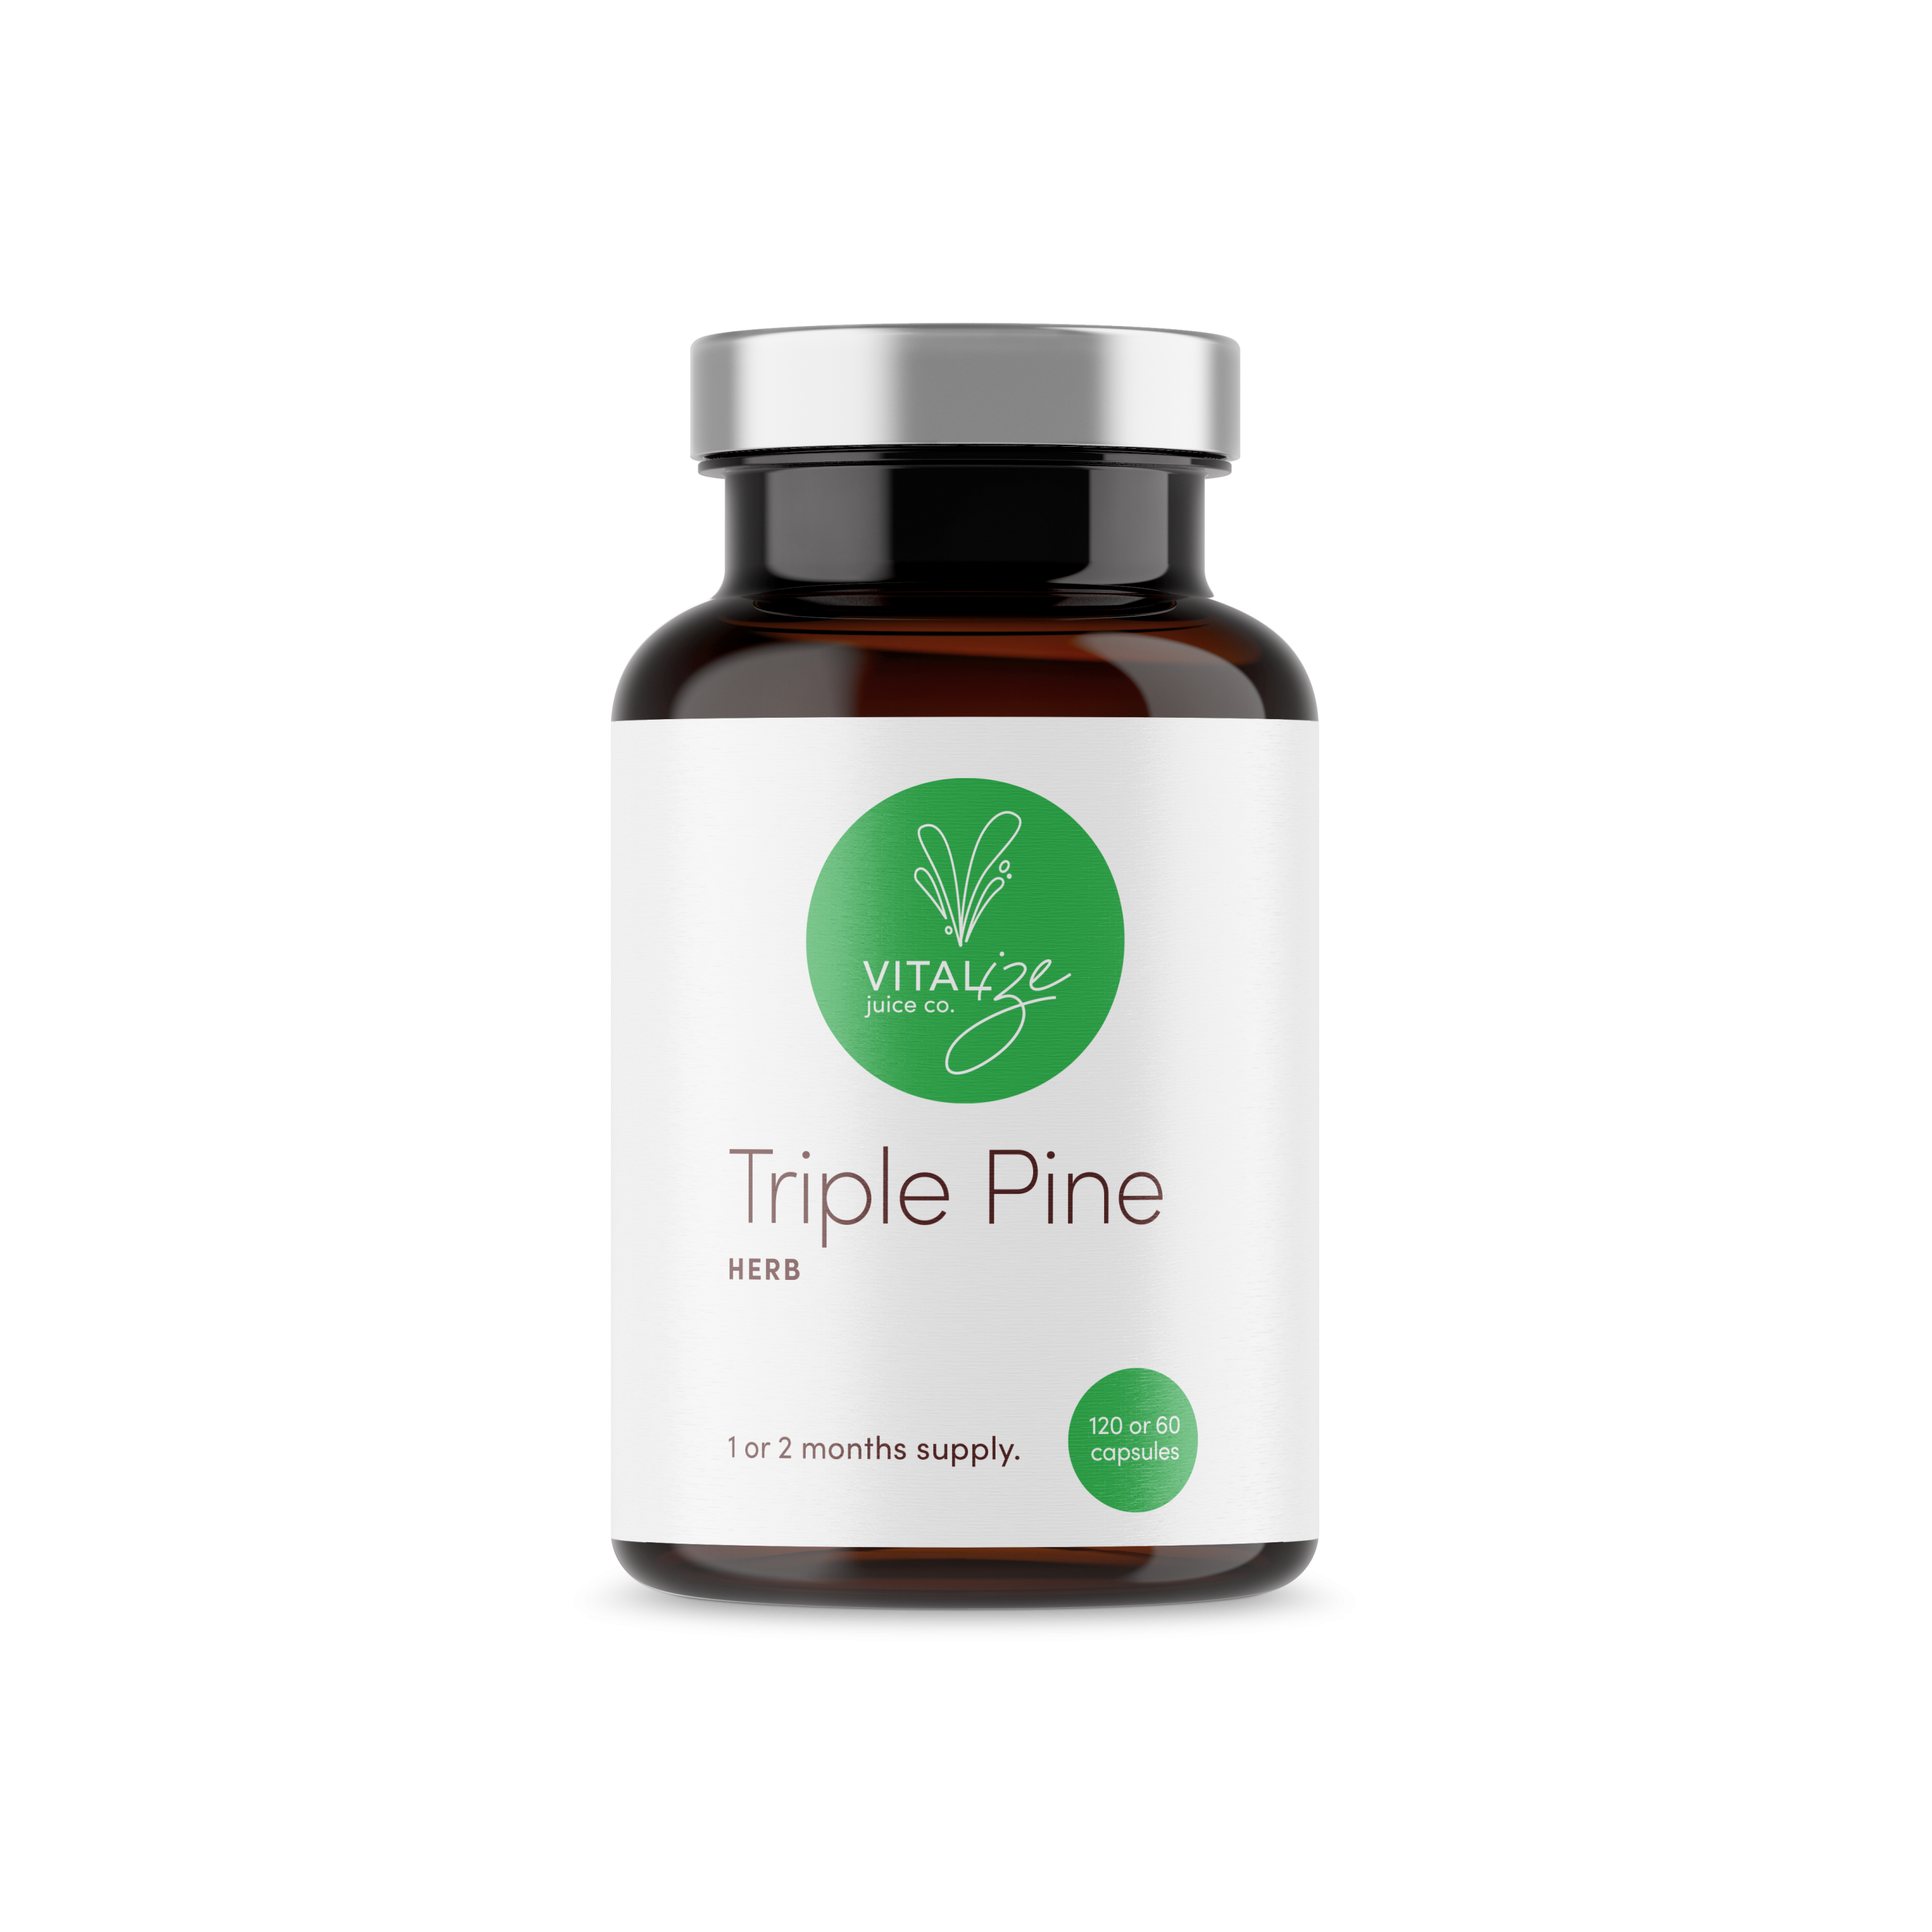 Triple Pine Benefits